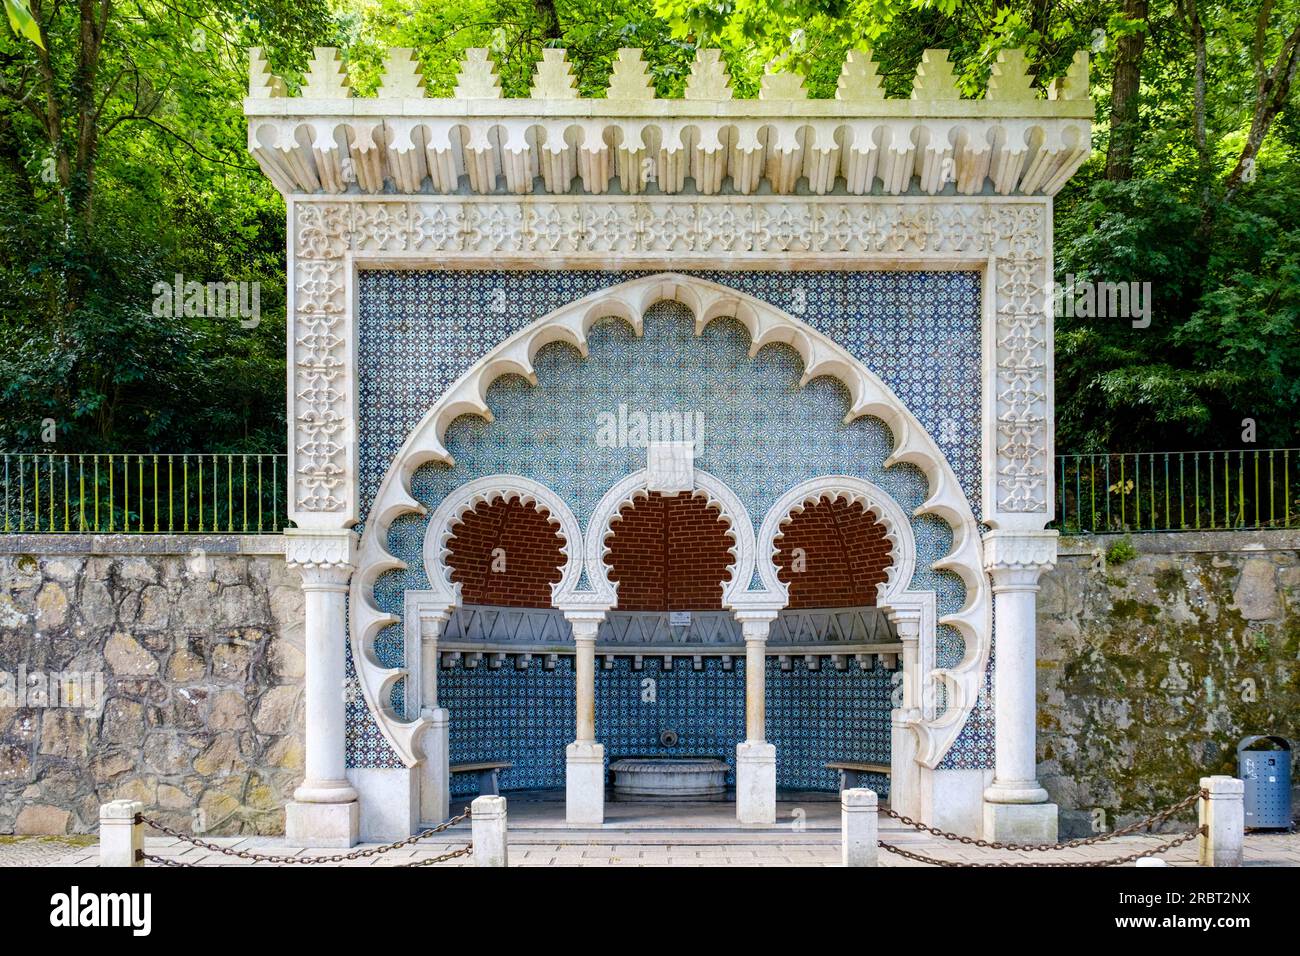 Fonte Mourisca, Moorish Fountain, public water fountain in Neo-Mudéjar architectural style with horseshoe arches, Sintra, Portugal Stock Photo